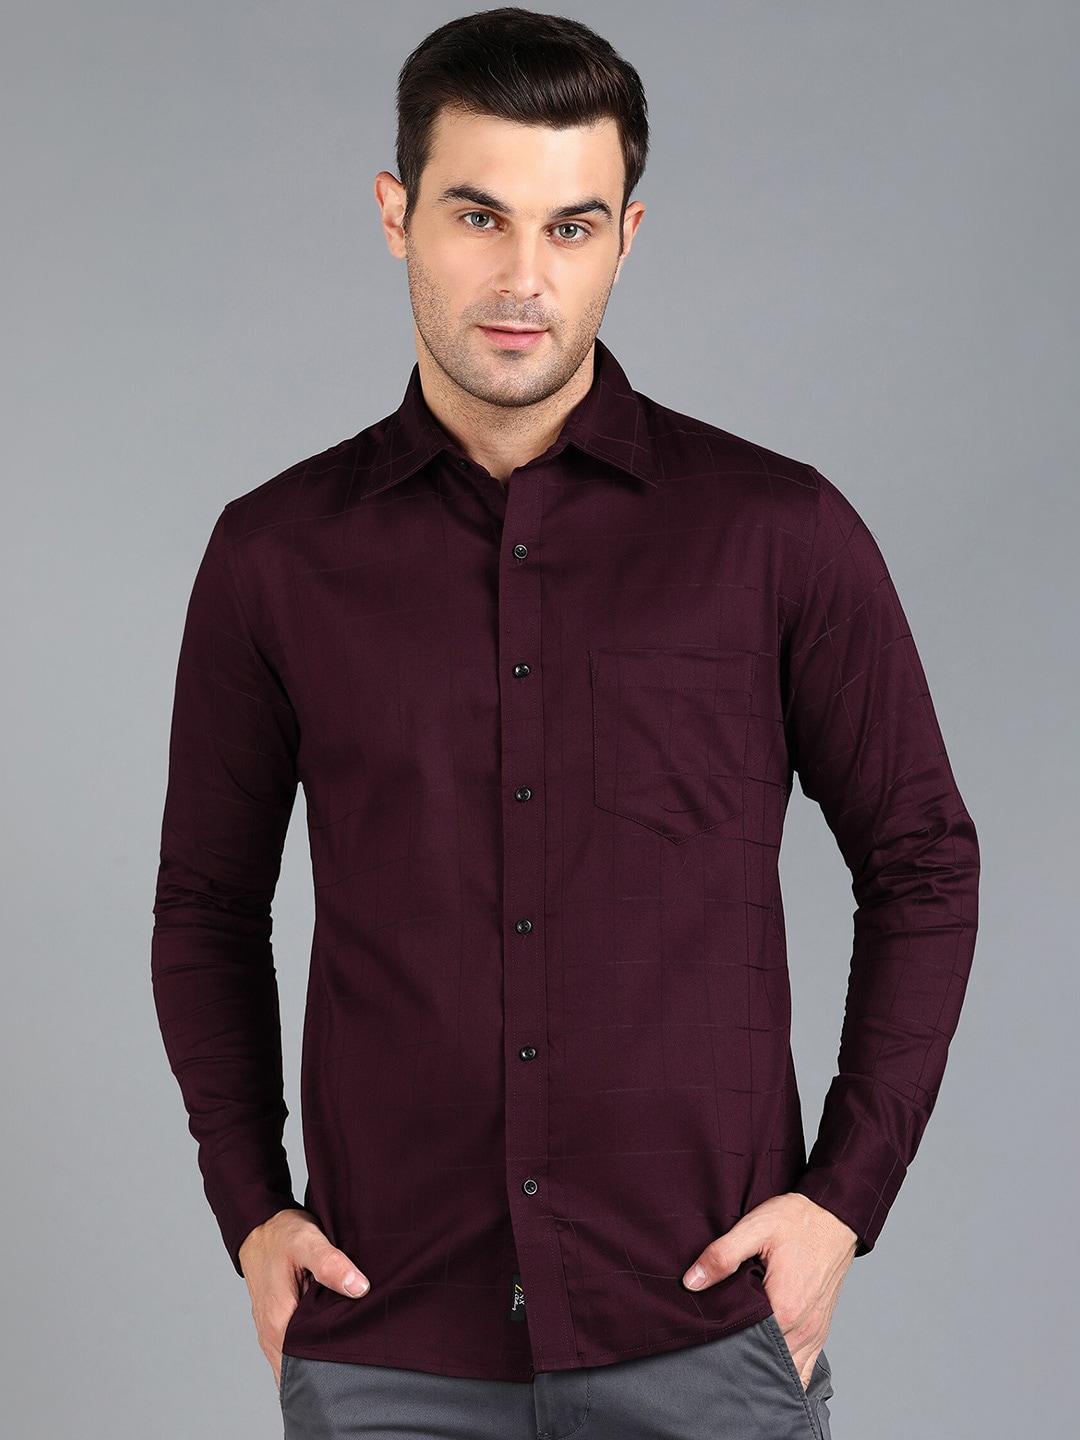 znx-clothing-men-maroon-premium-slim-fit-opaque-formal-shirt